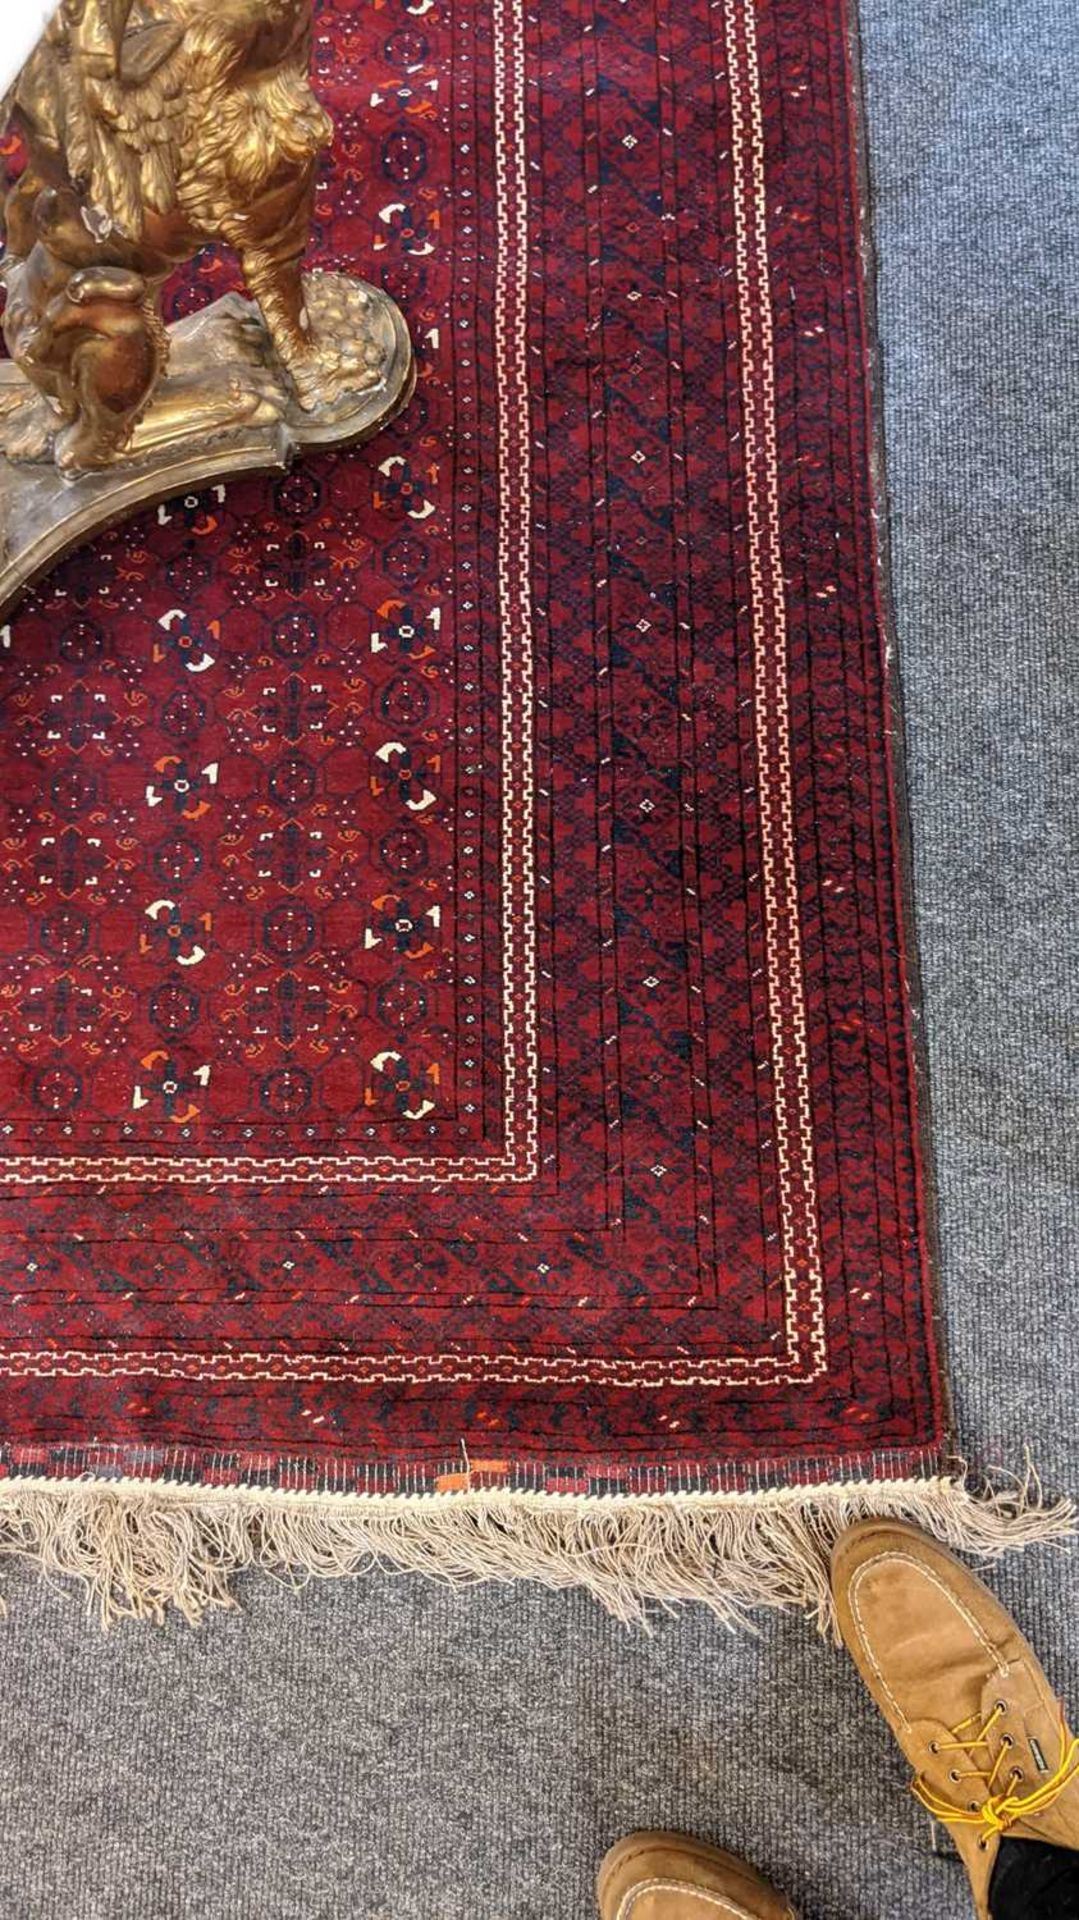 An Afghan Beshir rug, - Image 11 of 17